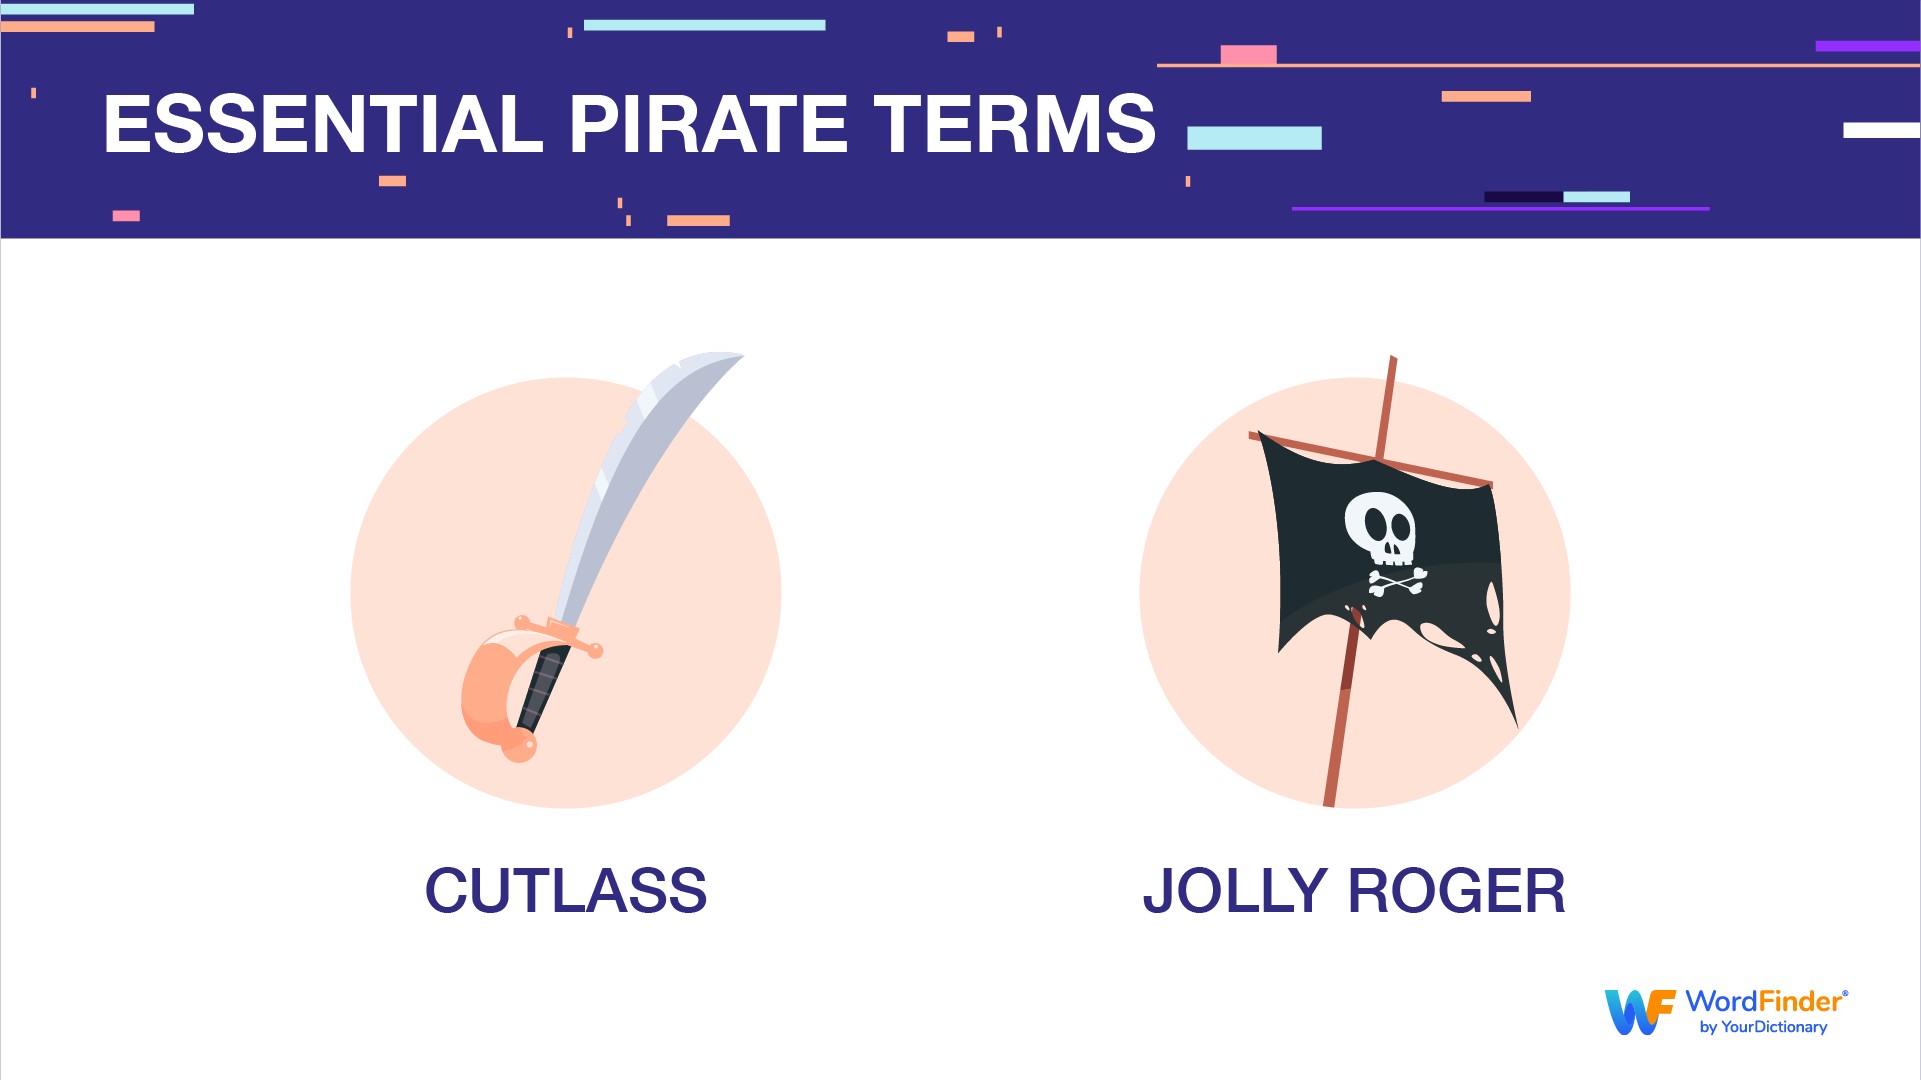 Essential pirate terms